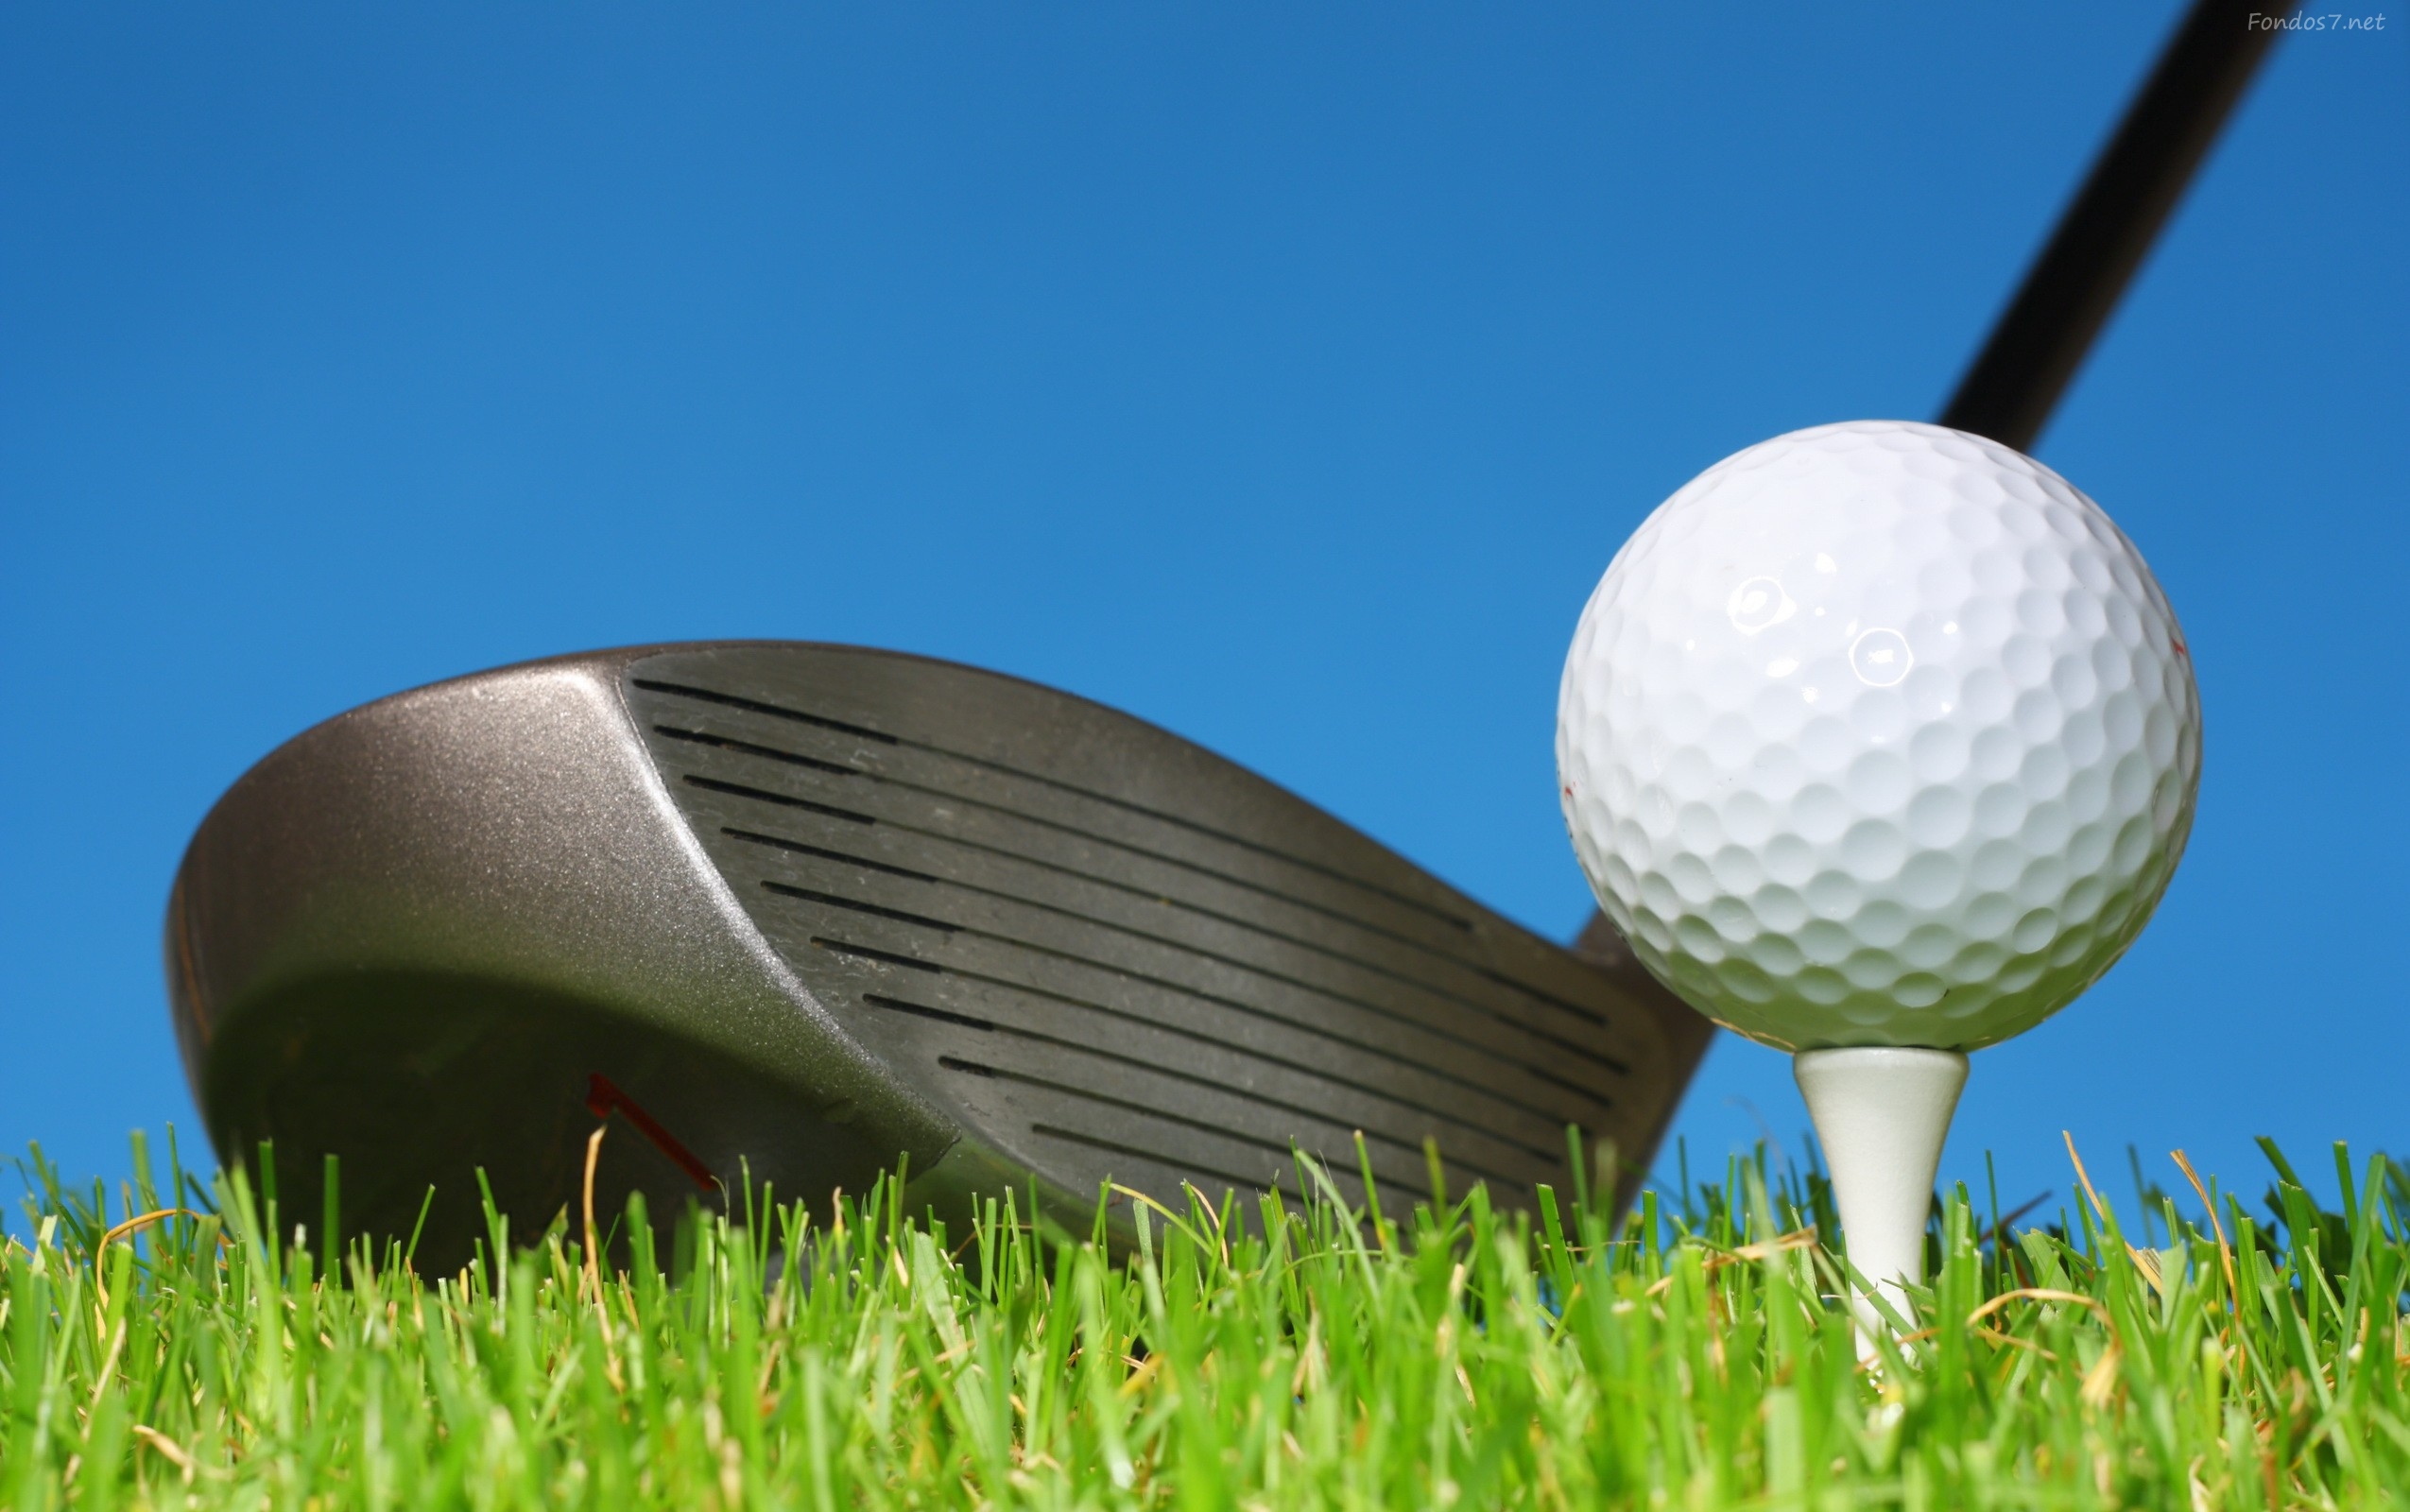 Descargar Fondos De Pantalla Golf HD Widescreen Gratis Imagenes